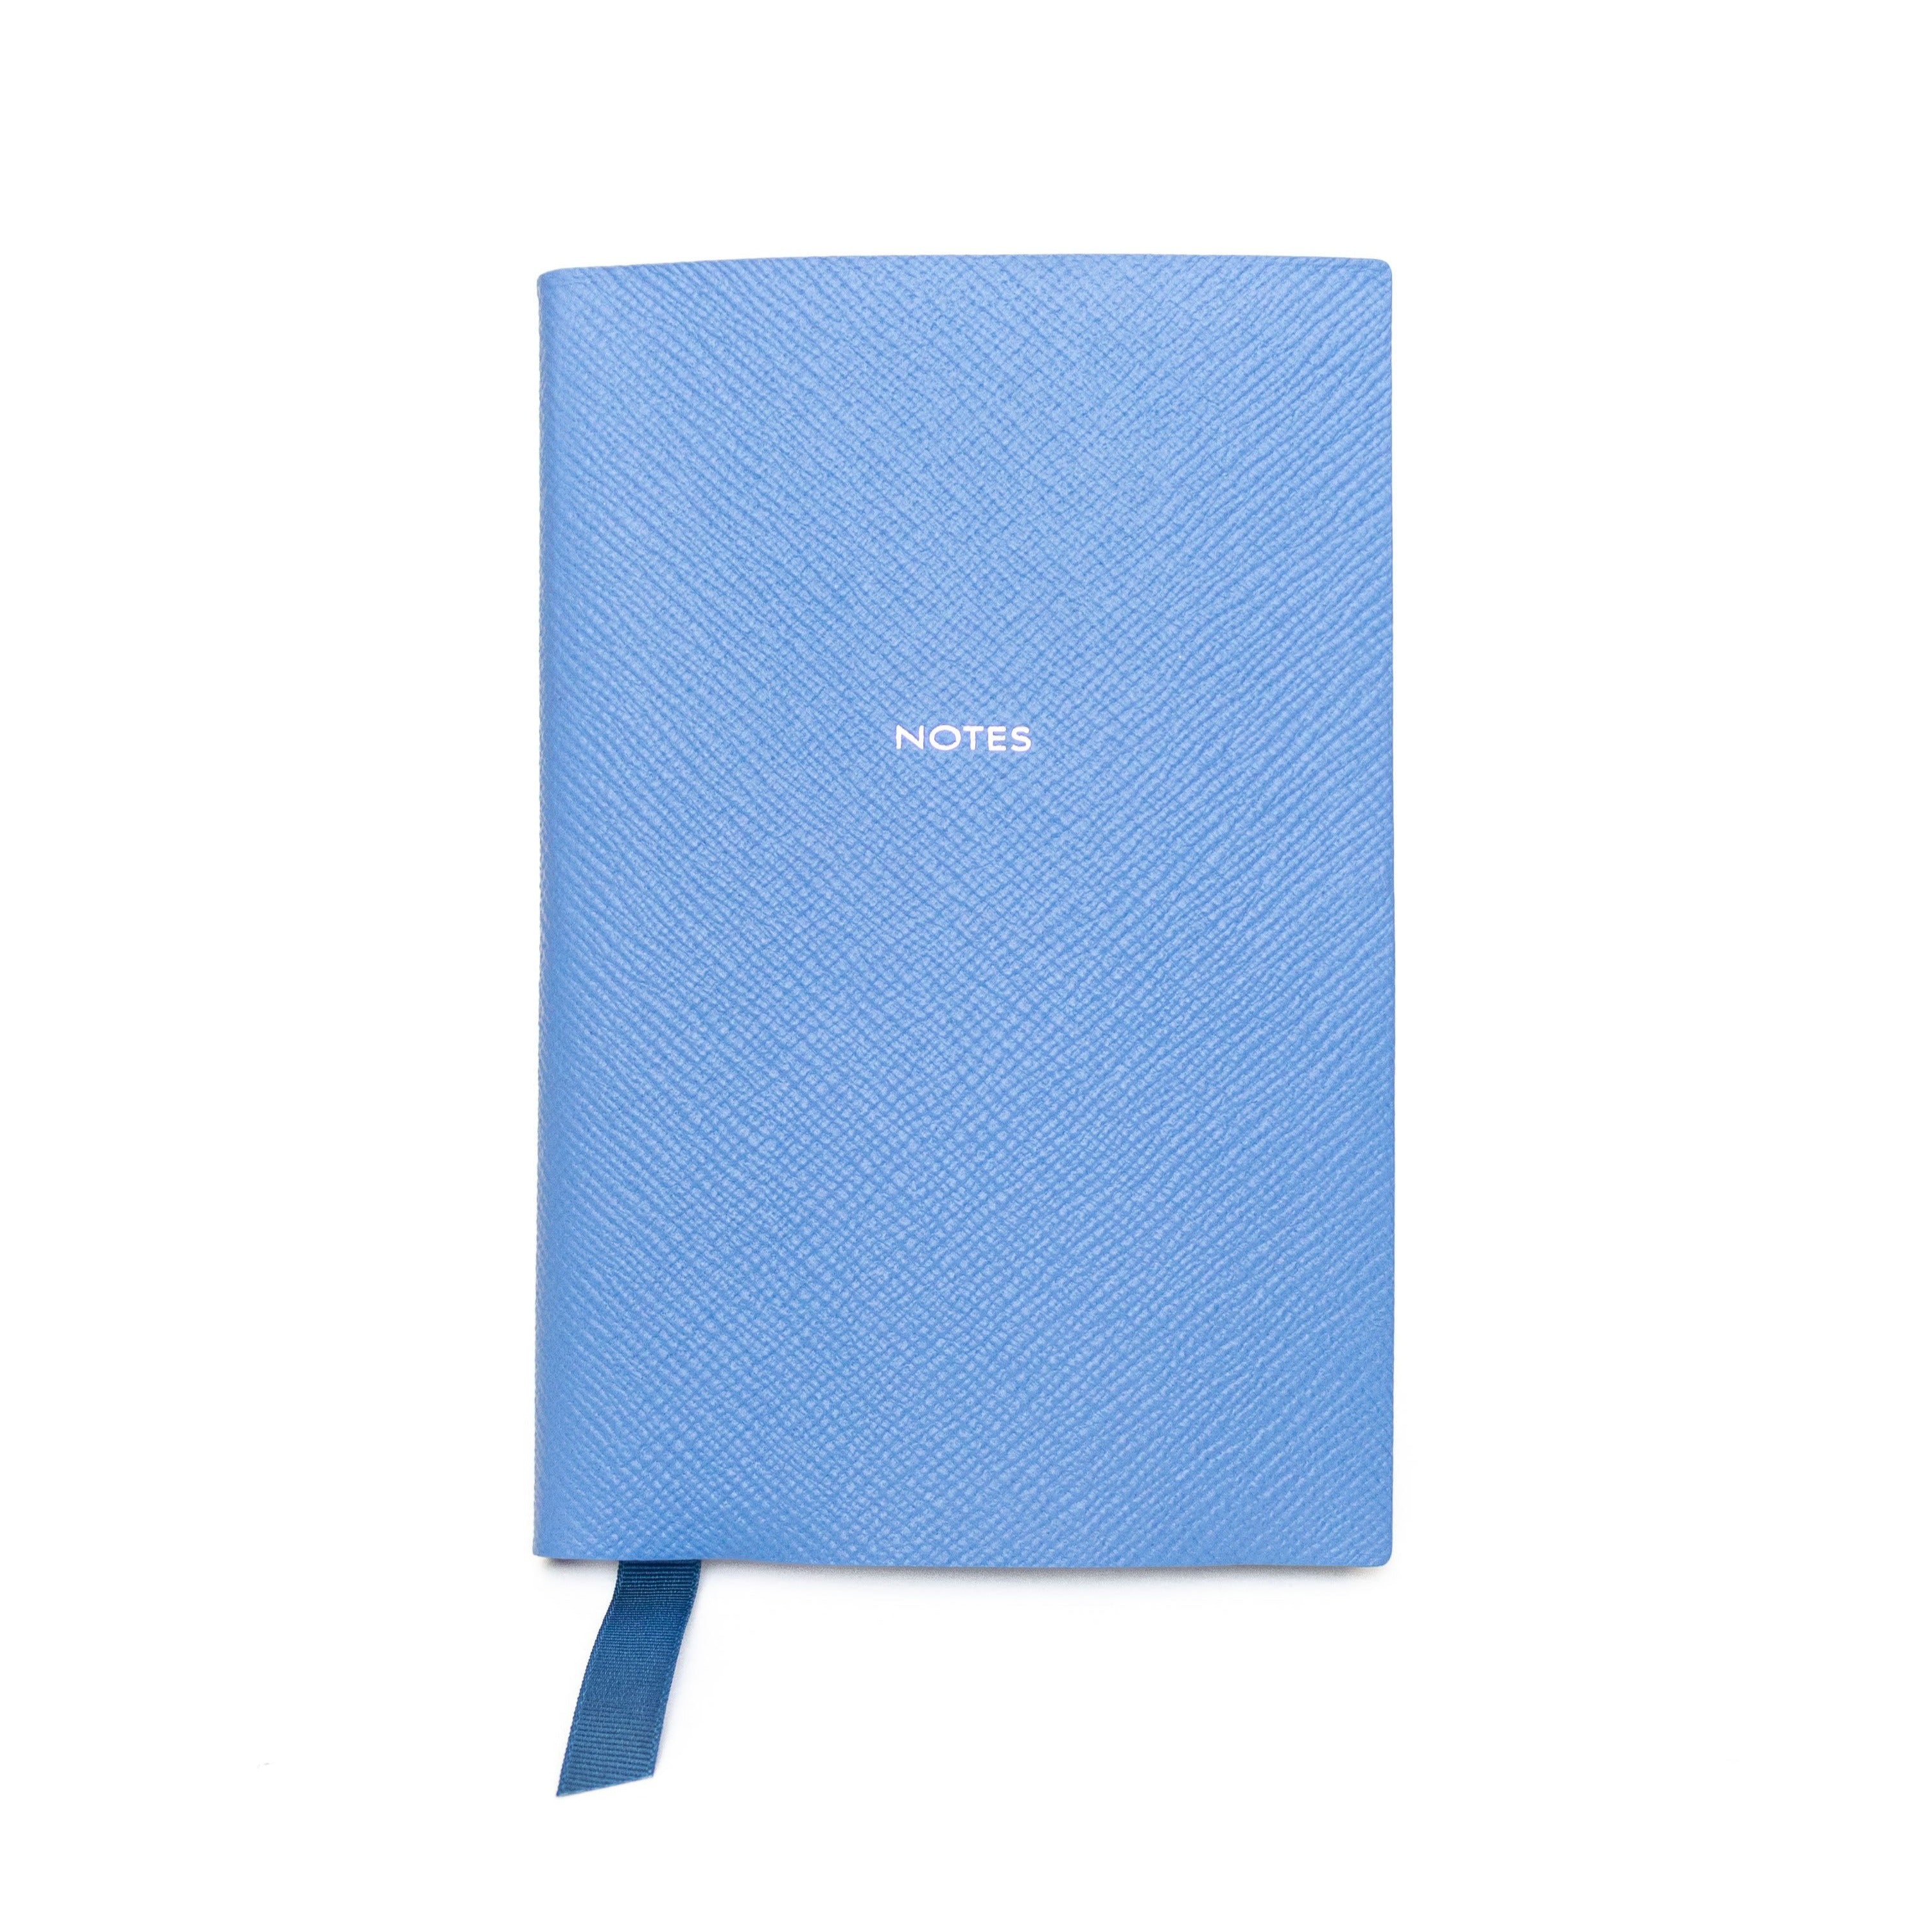 Smythson Chelsea Notebook Notes Blue - Decree Co. 